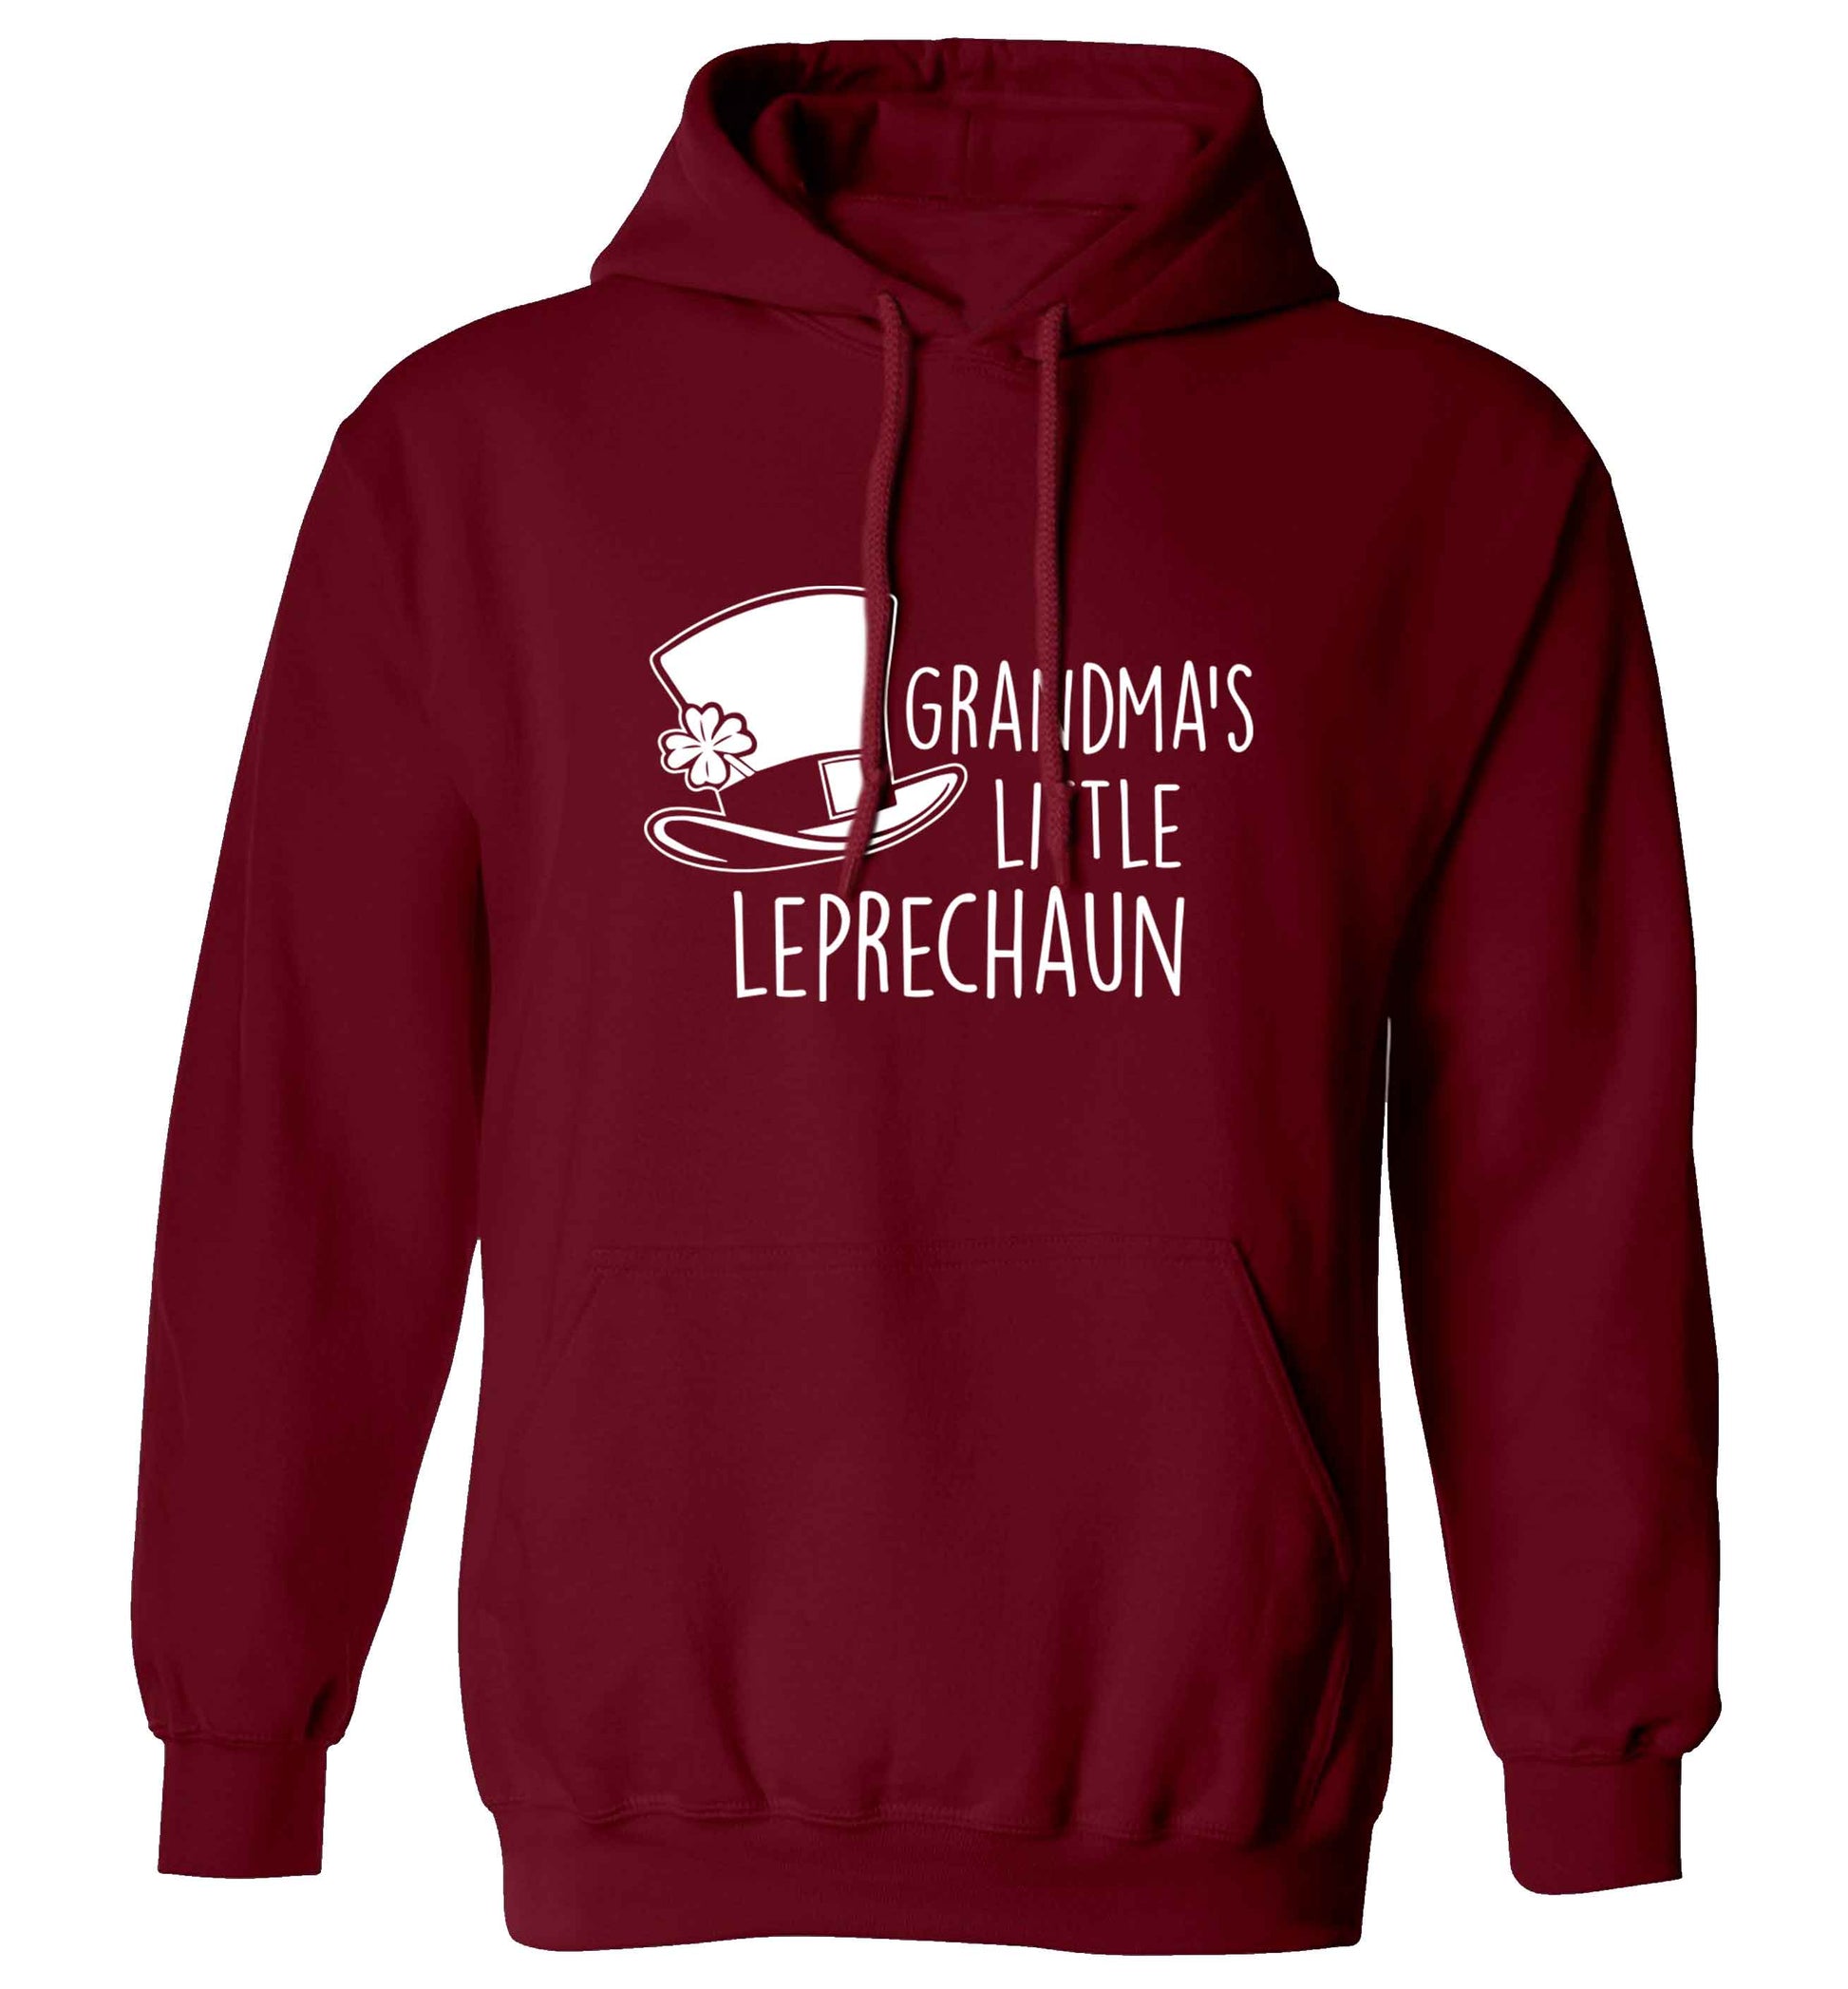 Grandma's little leprechaun adults unisex maroon hoodie 2XL